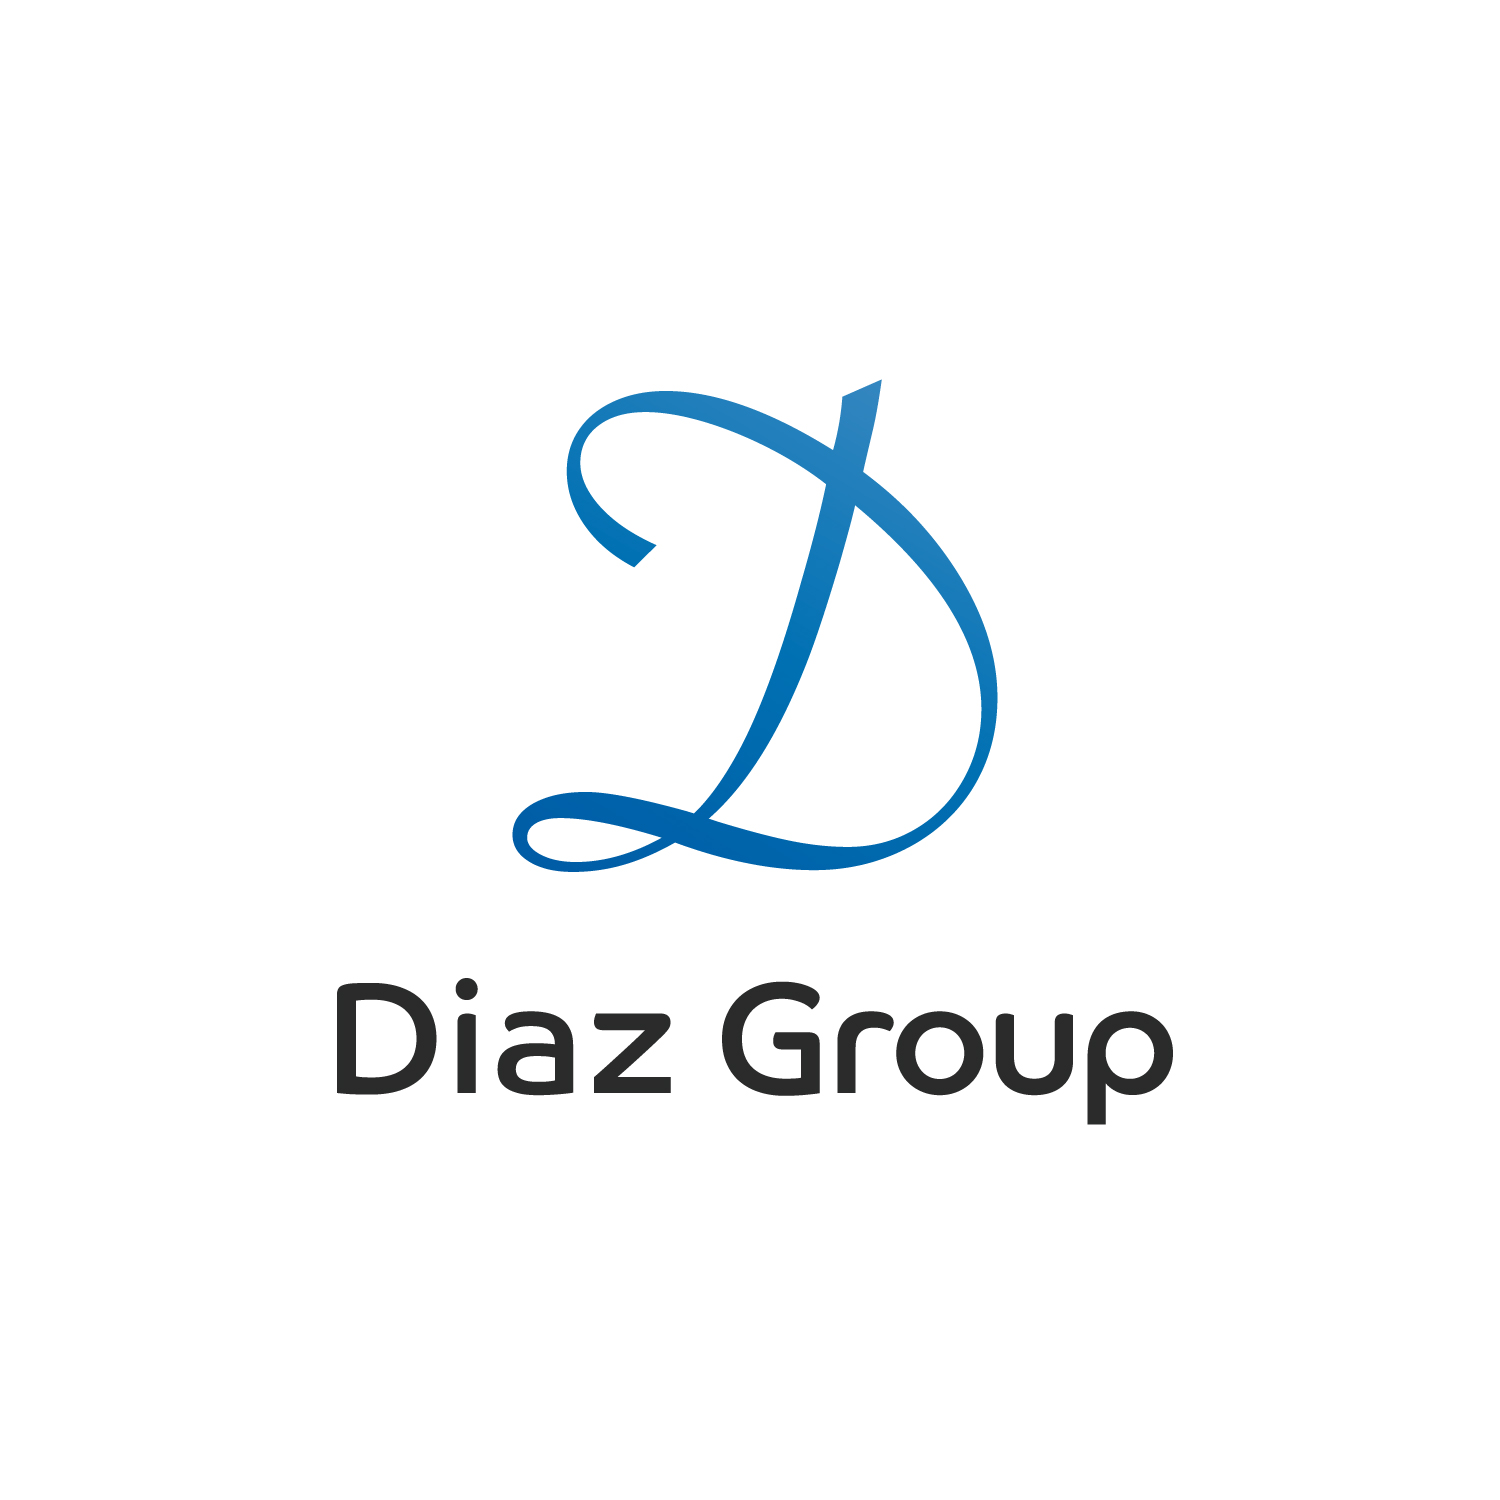 Diaz Group